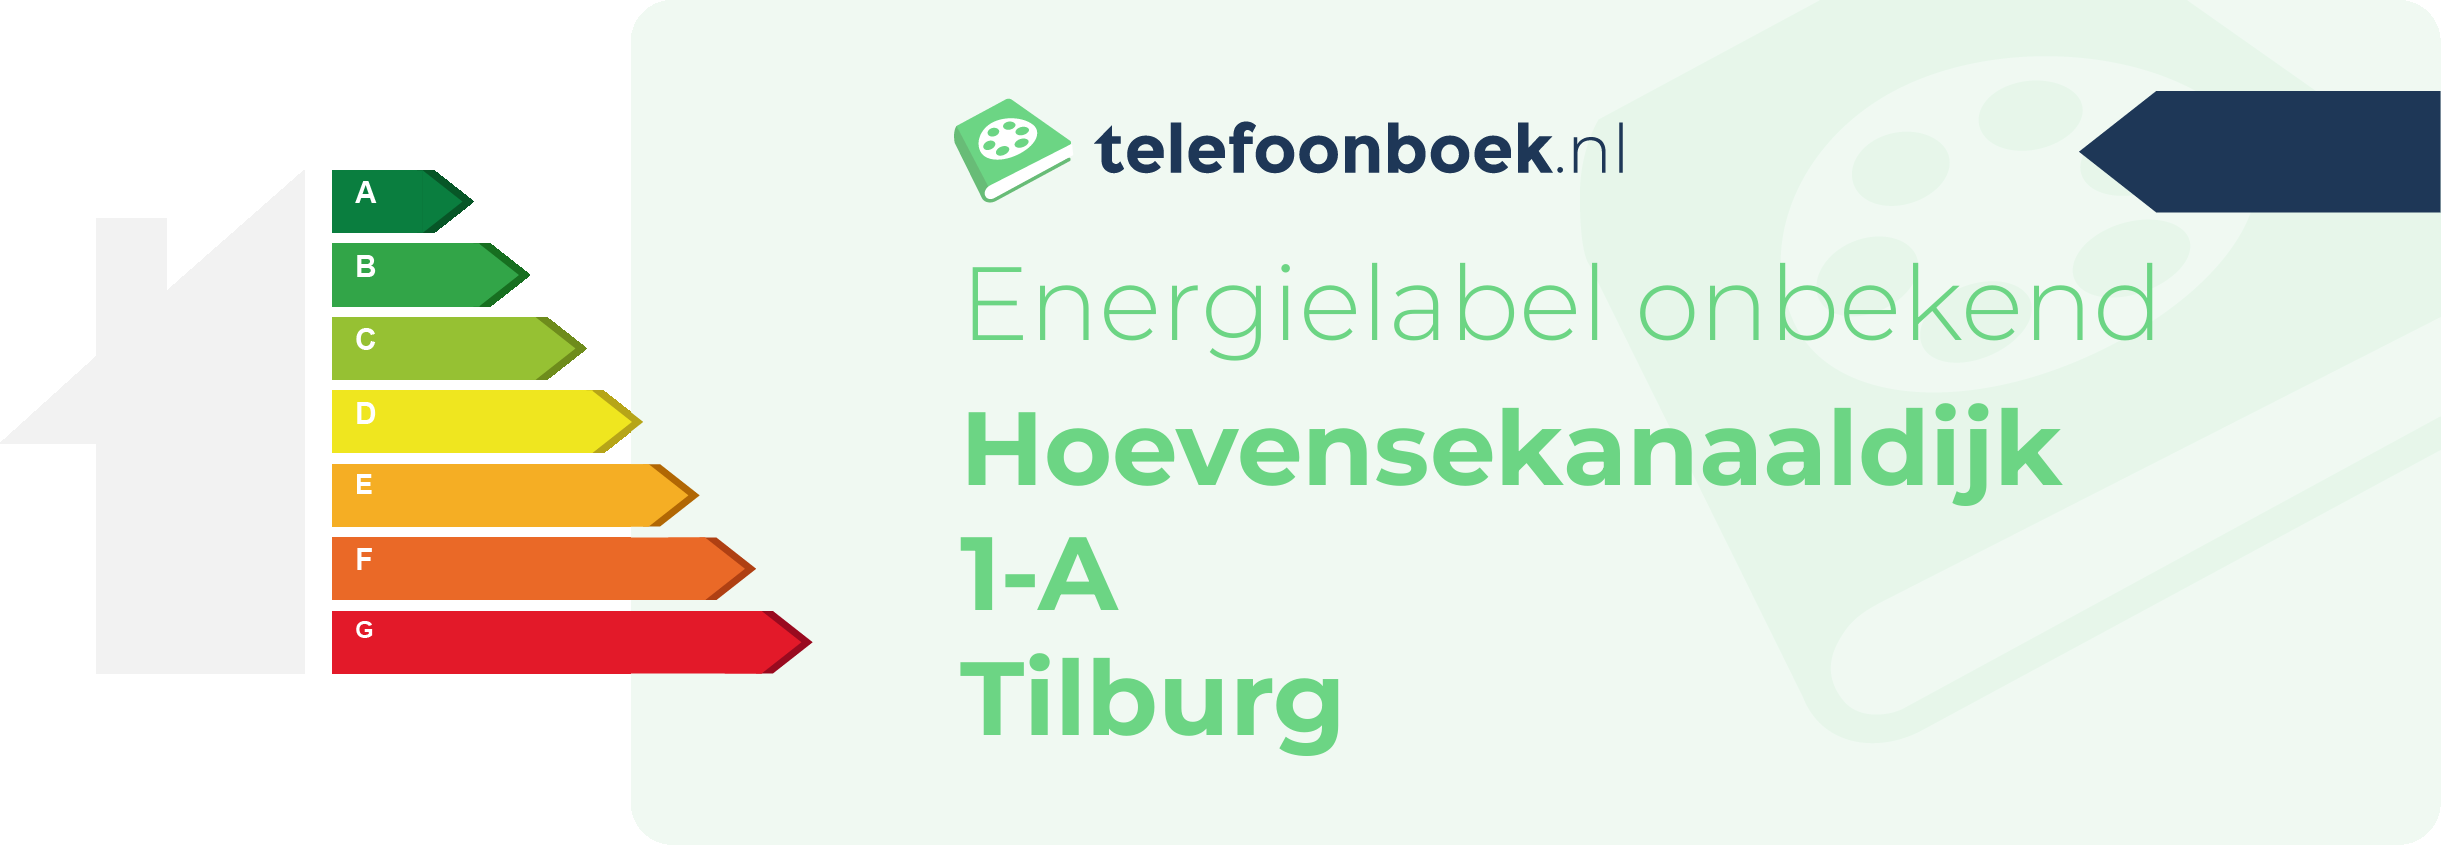 Energielabel Hoevensekanaaldijk 1-A Tilburg